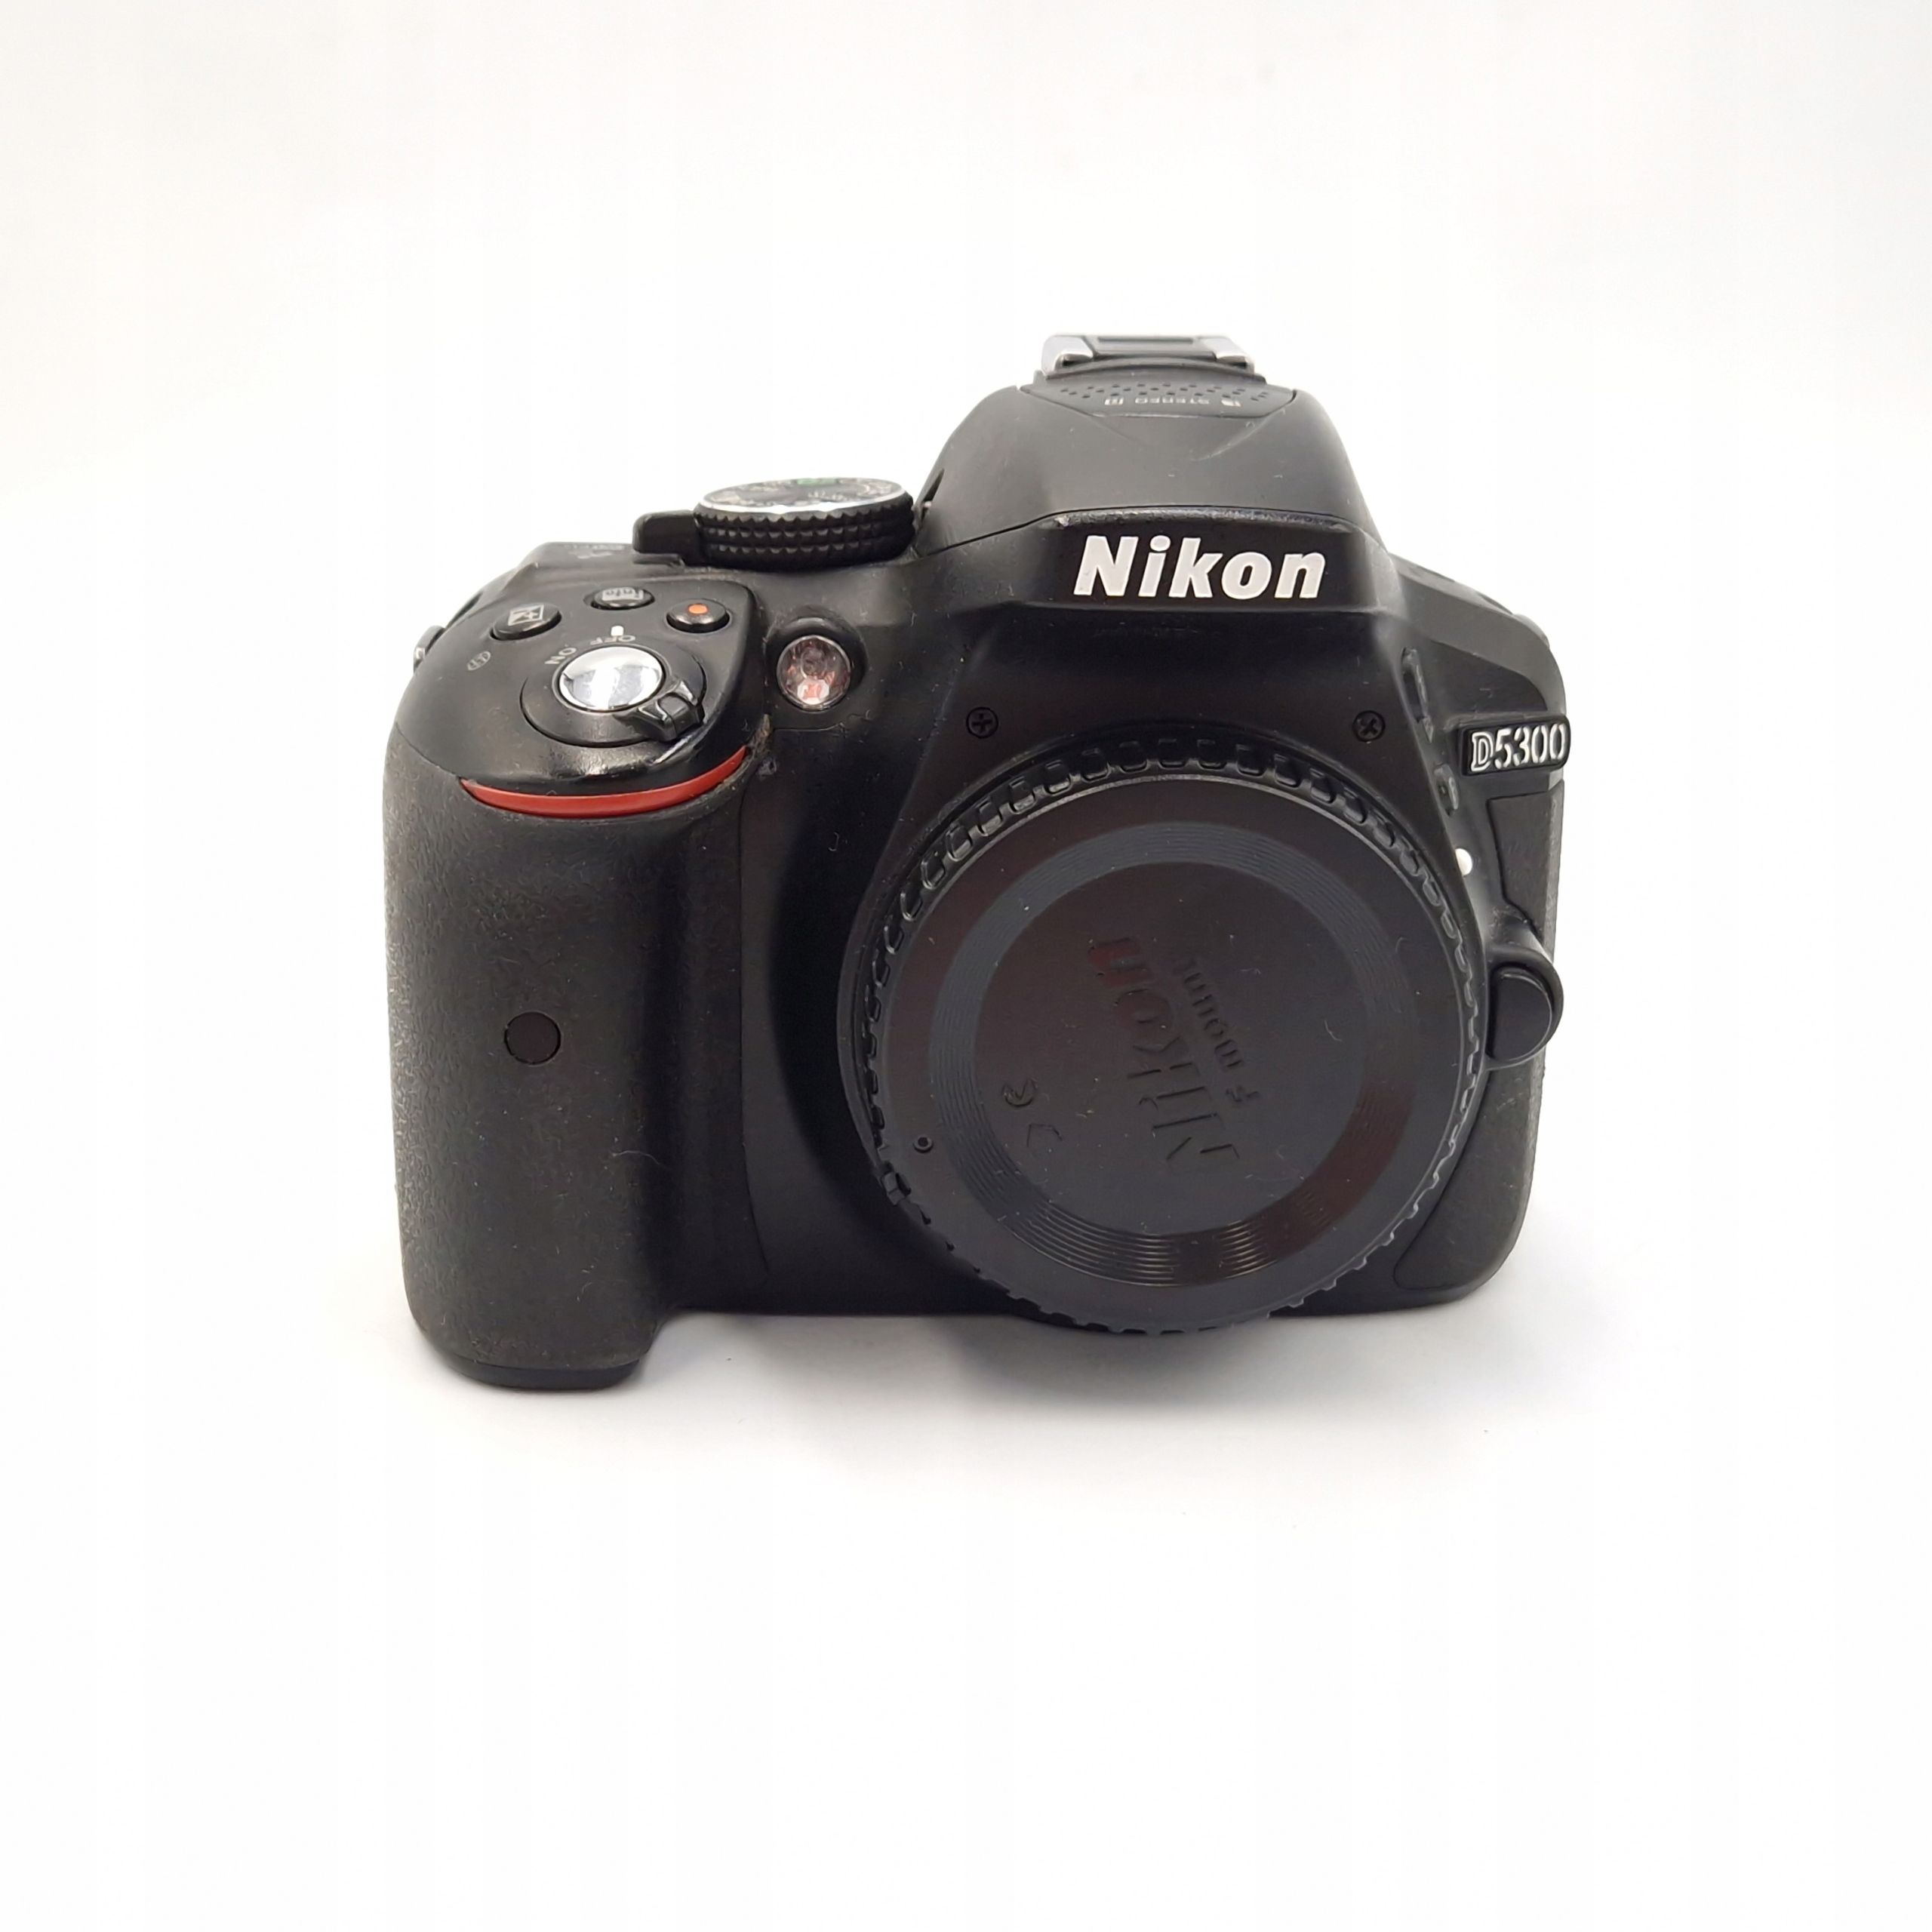 Lustrzanka Nikon D5300, 31384 zdjęć